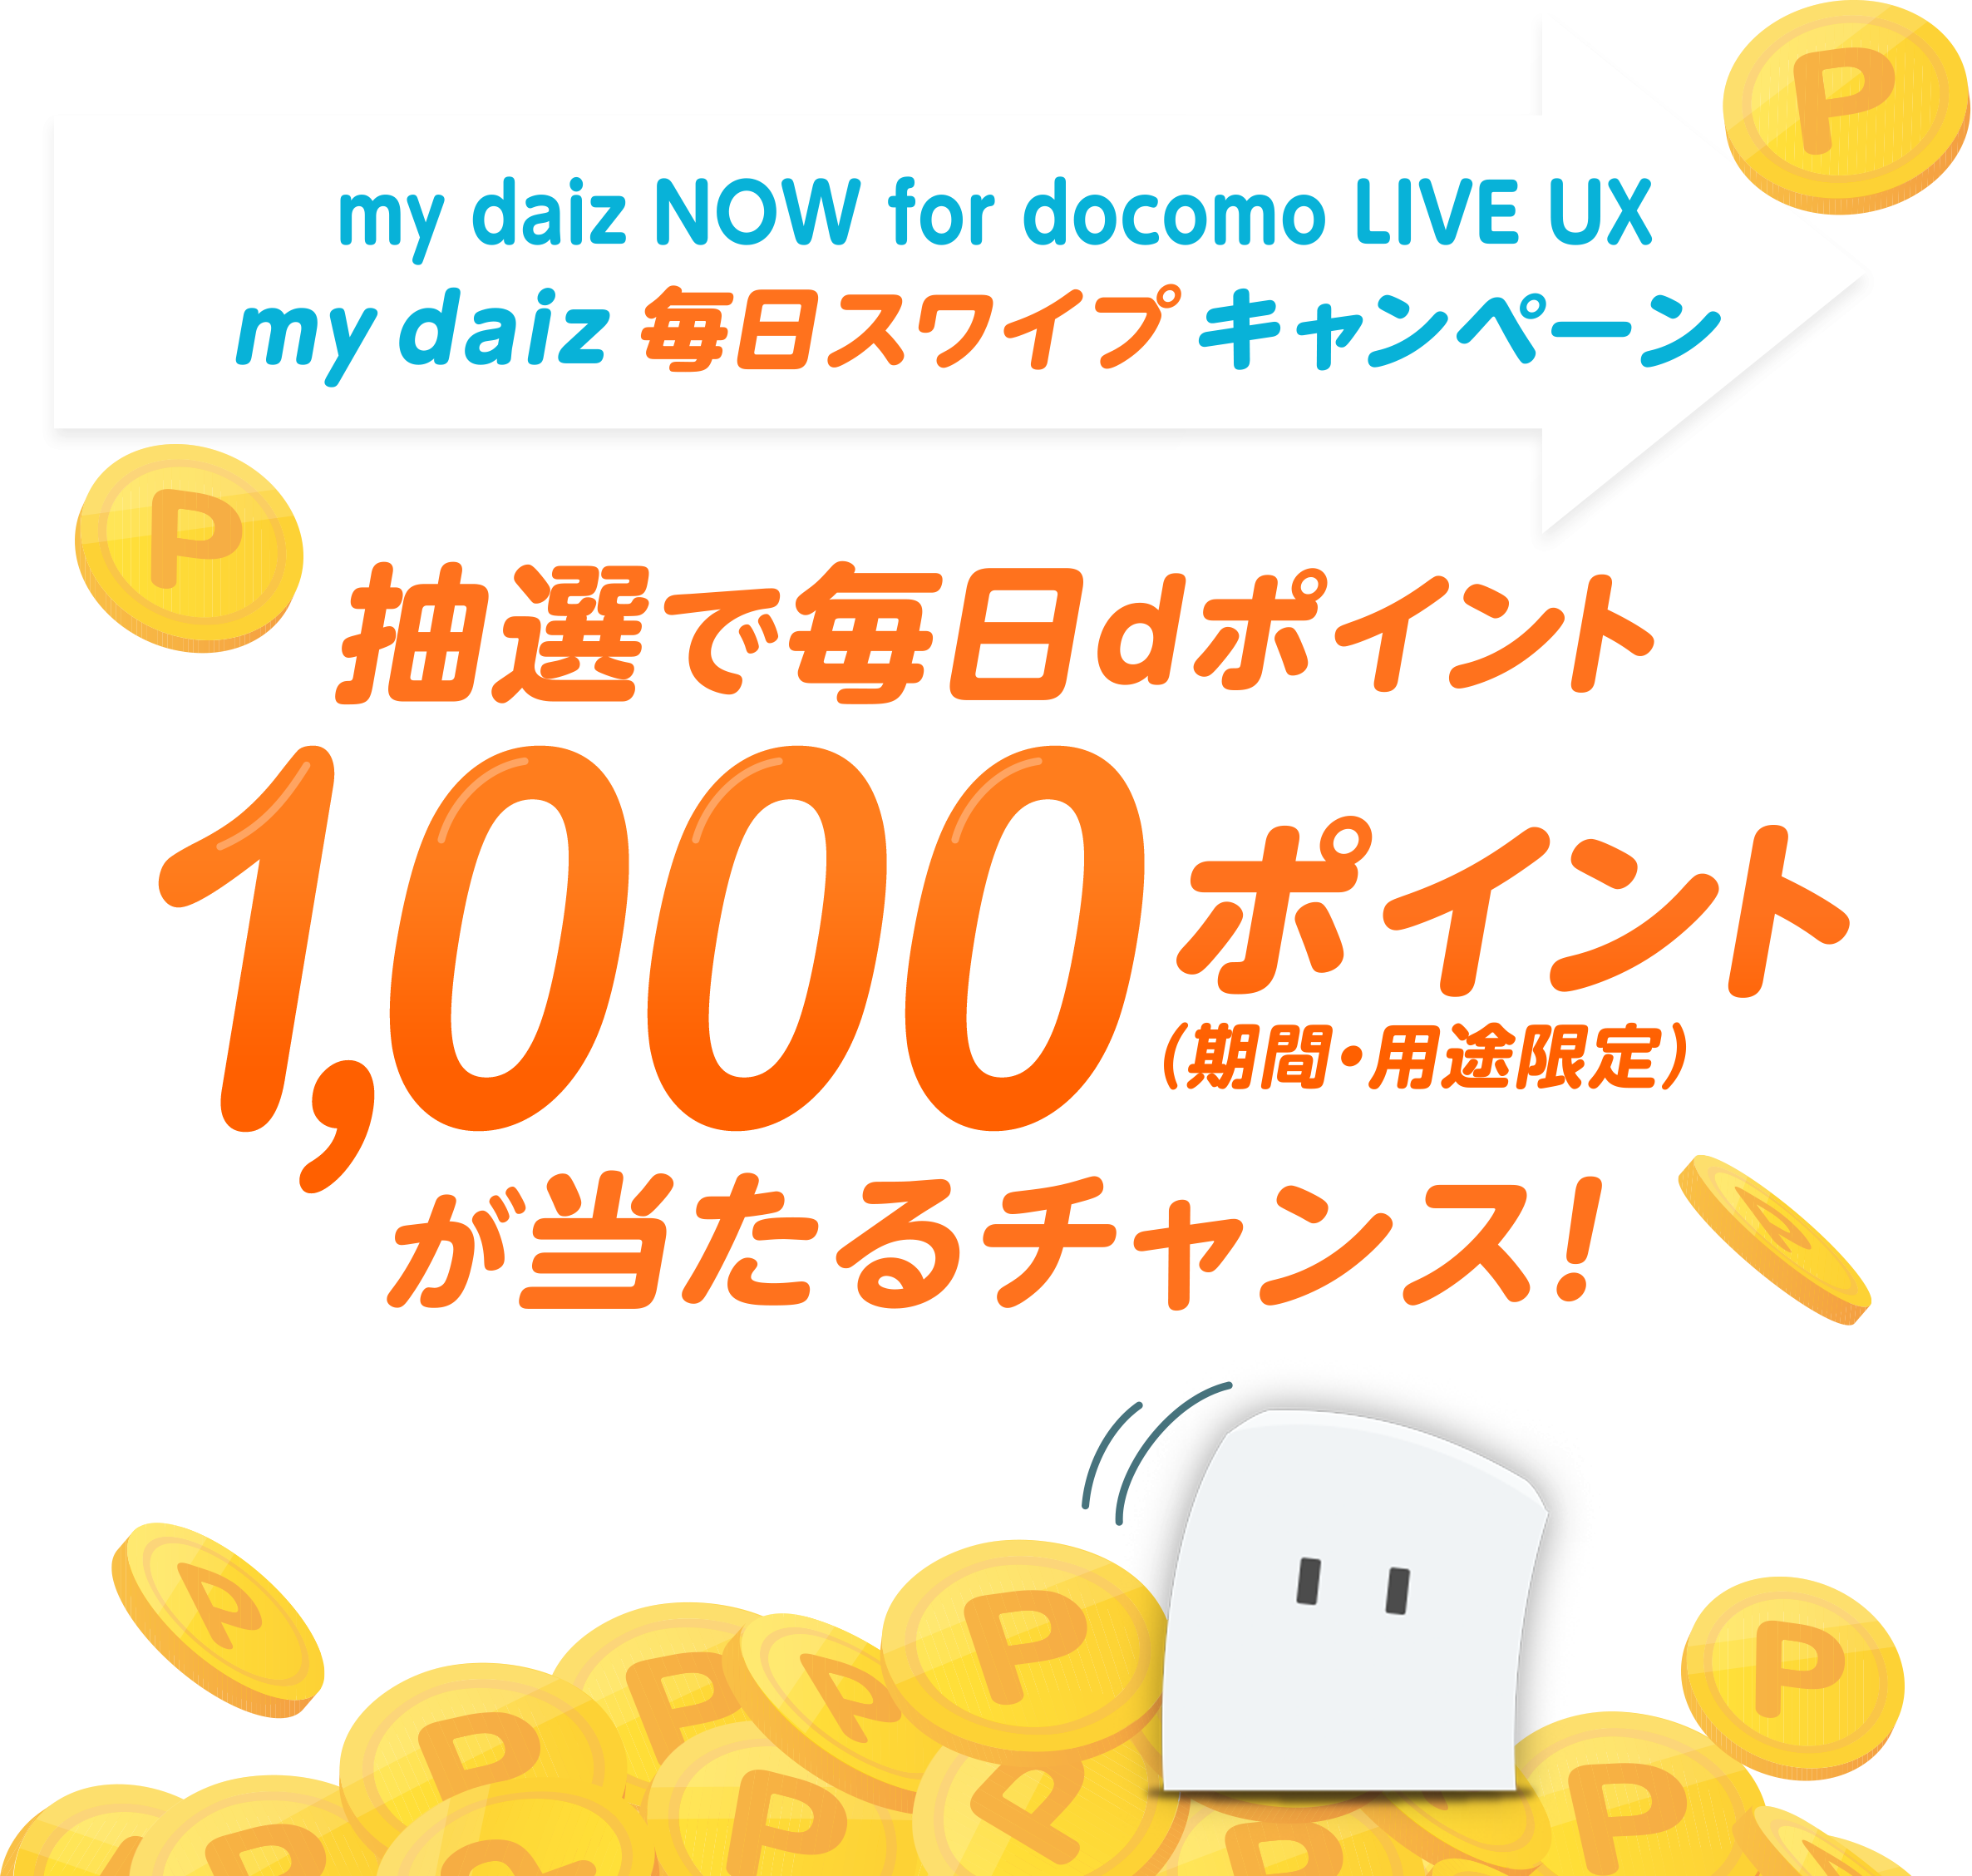 my daiz NOW for docomo LIVE UX my daiz 毎日スワイプキャンペーン 抽選で毎日dポイント1,000ポイント(期間・用途限定)が当たるチャンス！